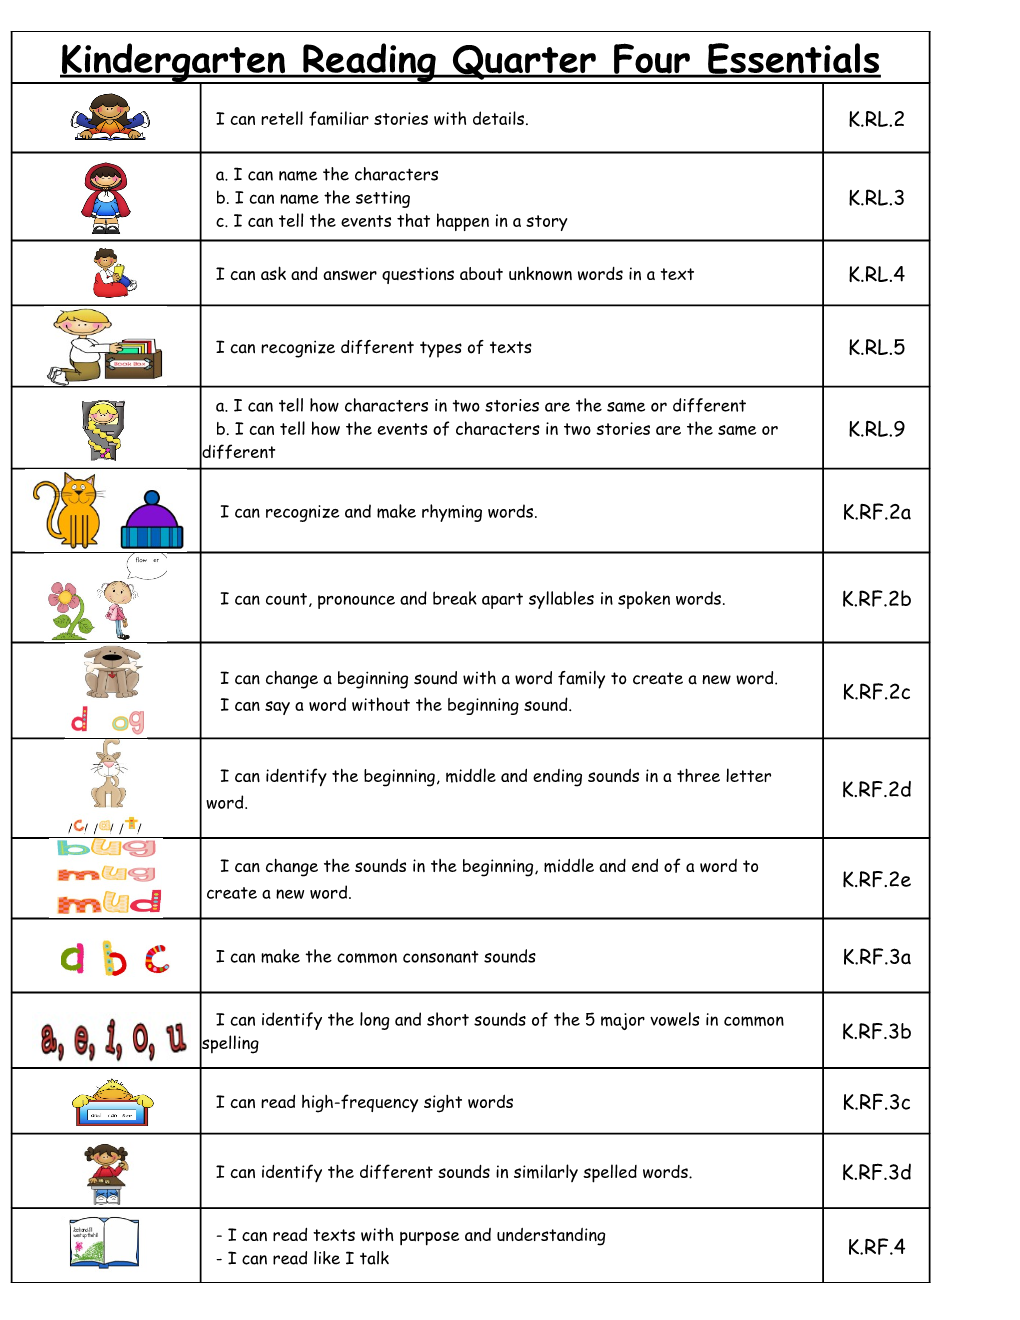 Kindergarten Reading Quarter Three Essentials